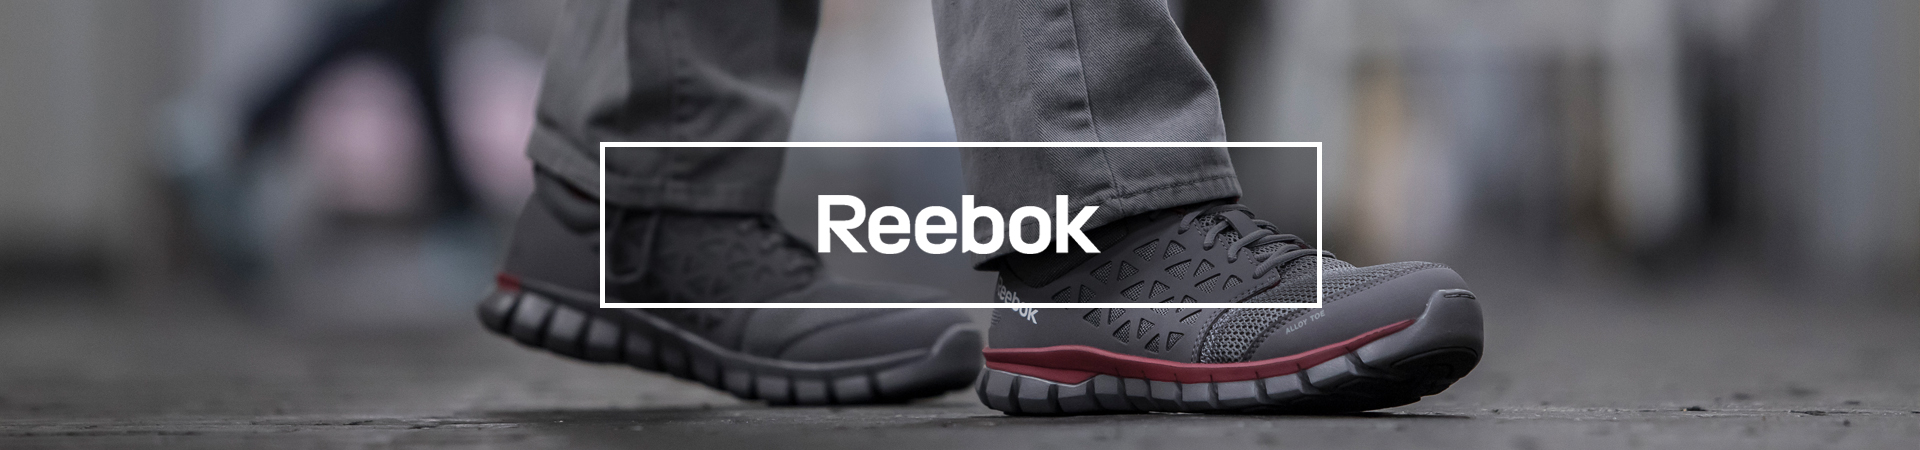 reebok restaurant shoes